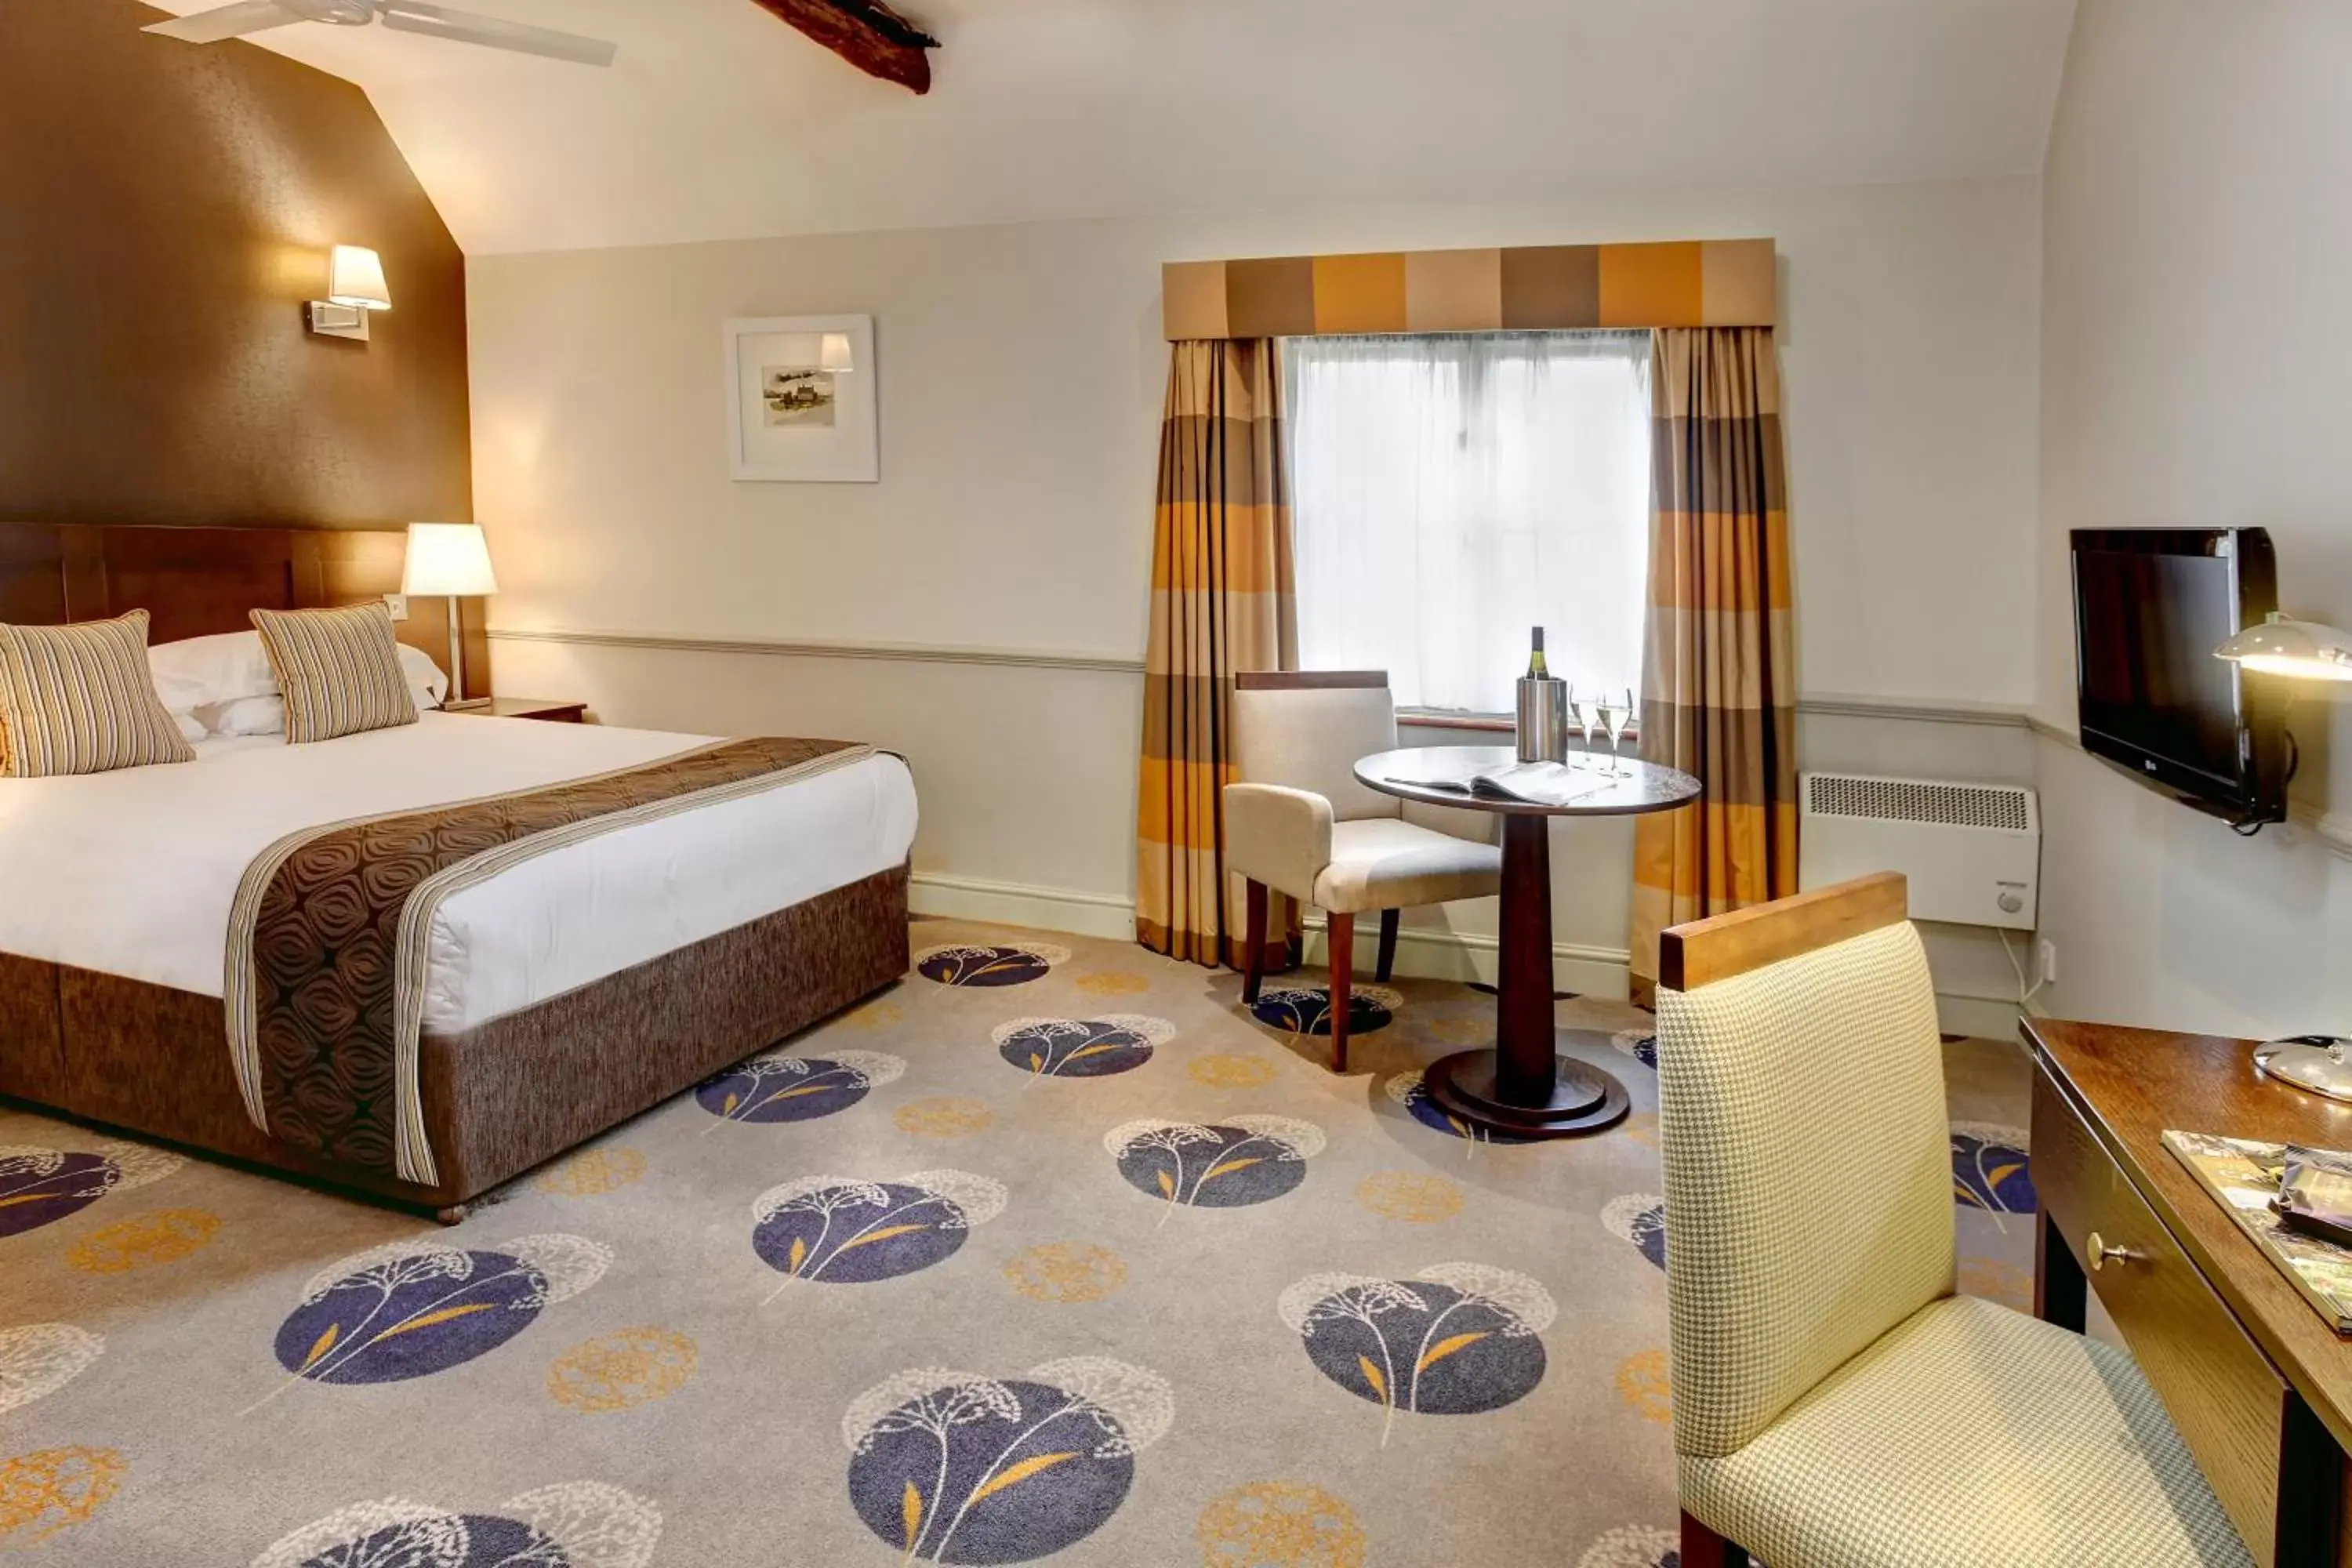 Bedroom, Room Photo in Quy Mill Hotel & Spa, Cambridge